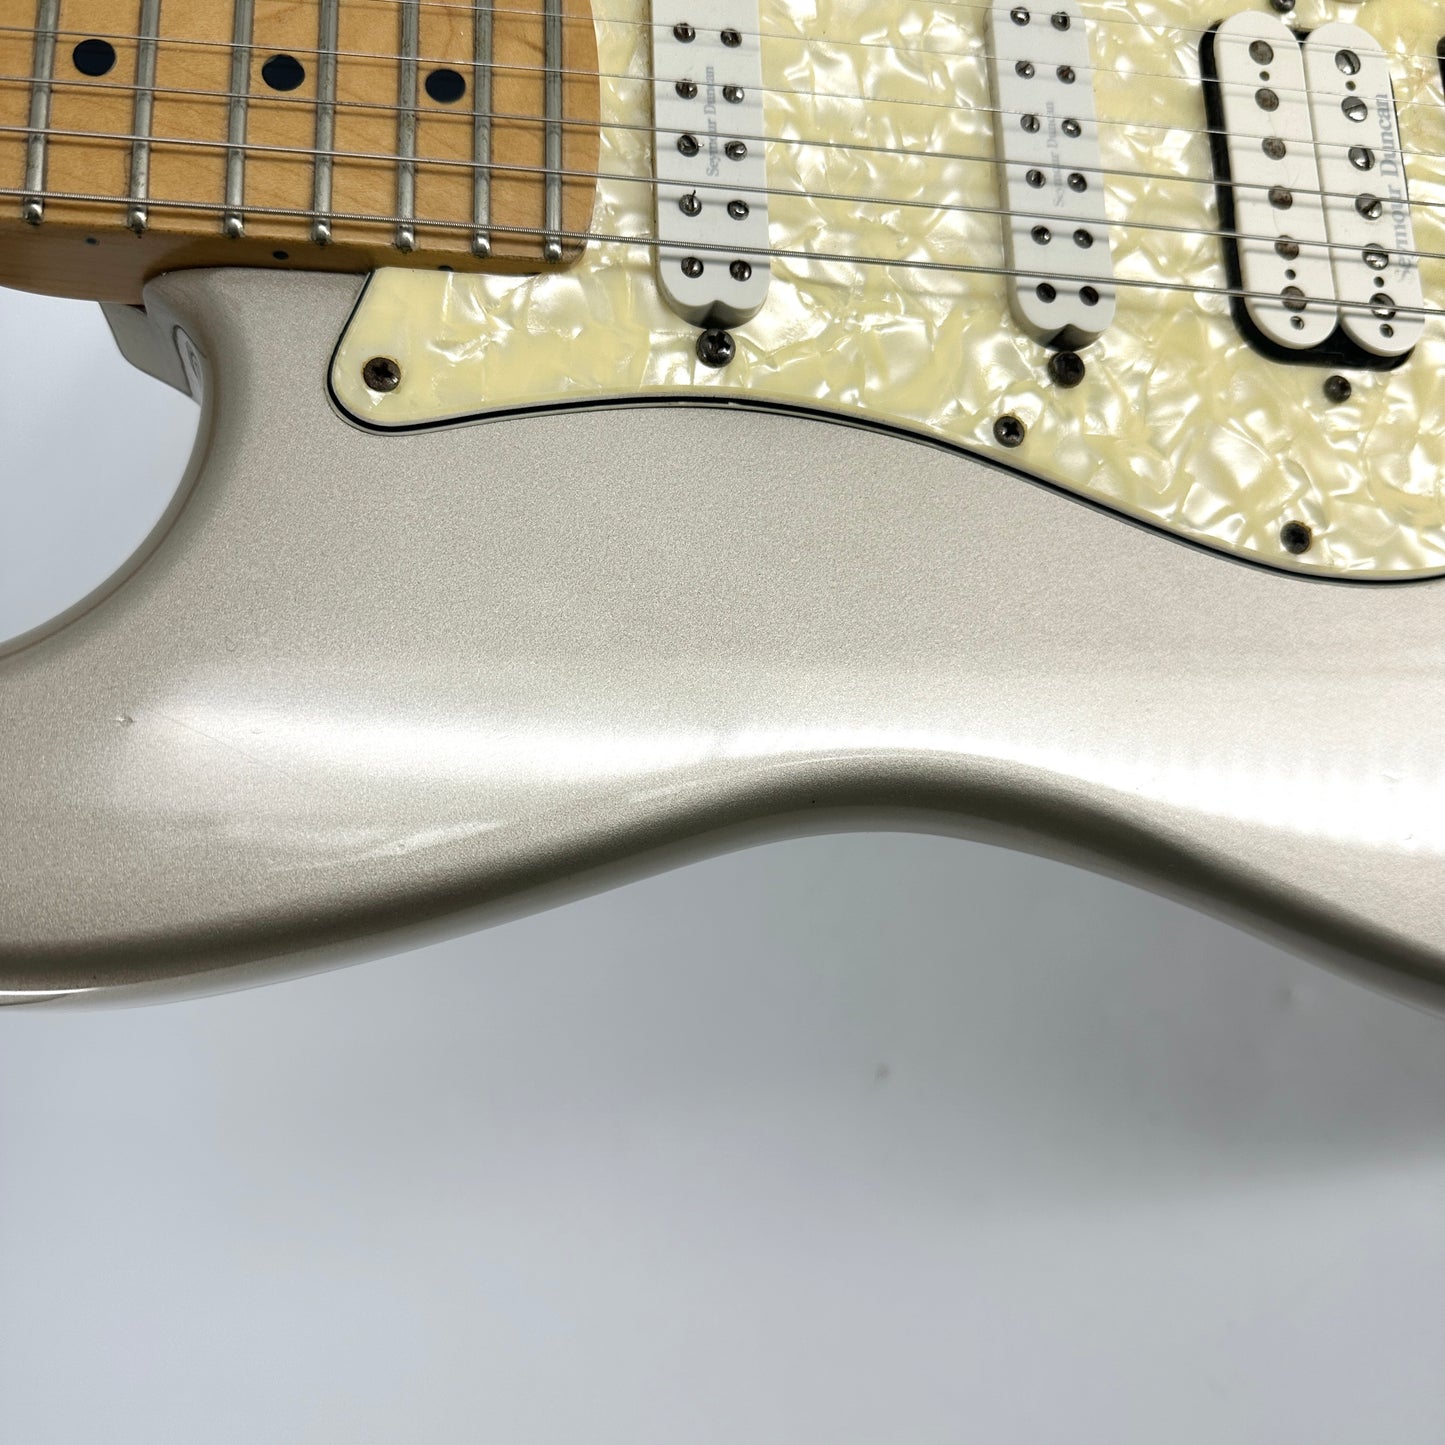 1999 Fender American Lone Star Stratocaster – Shoreline Gold